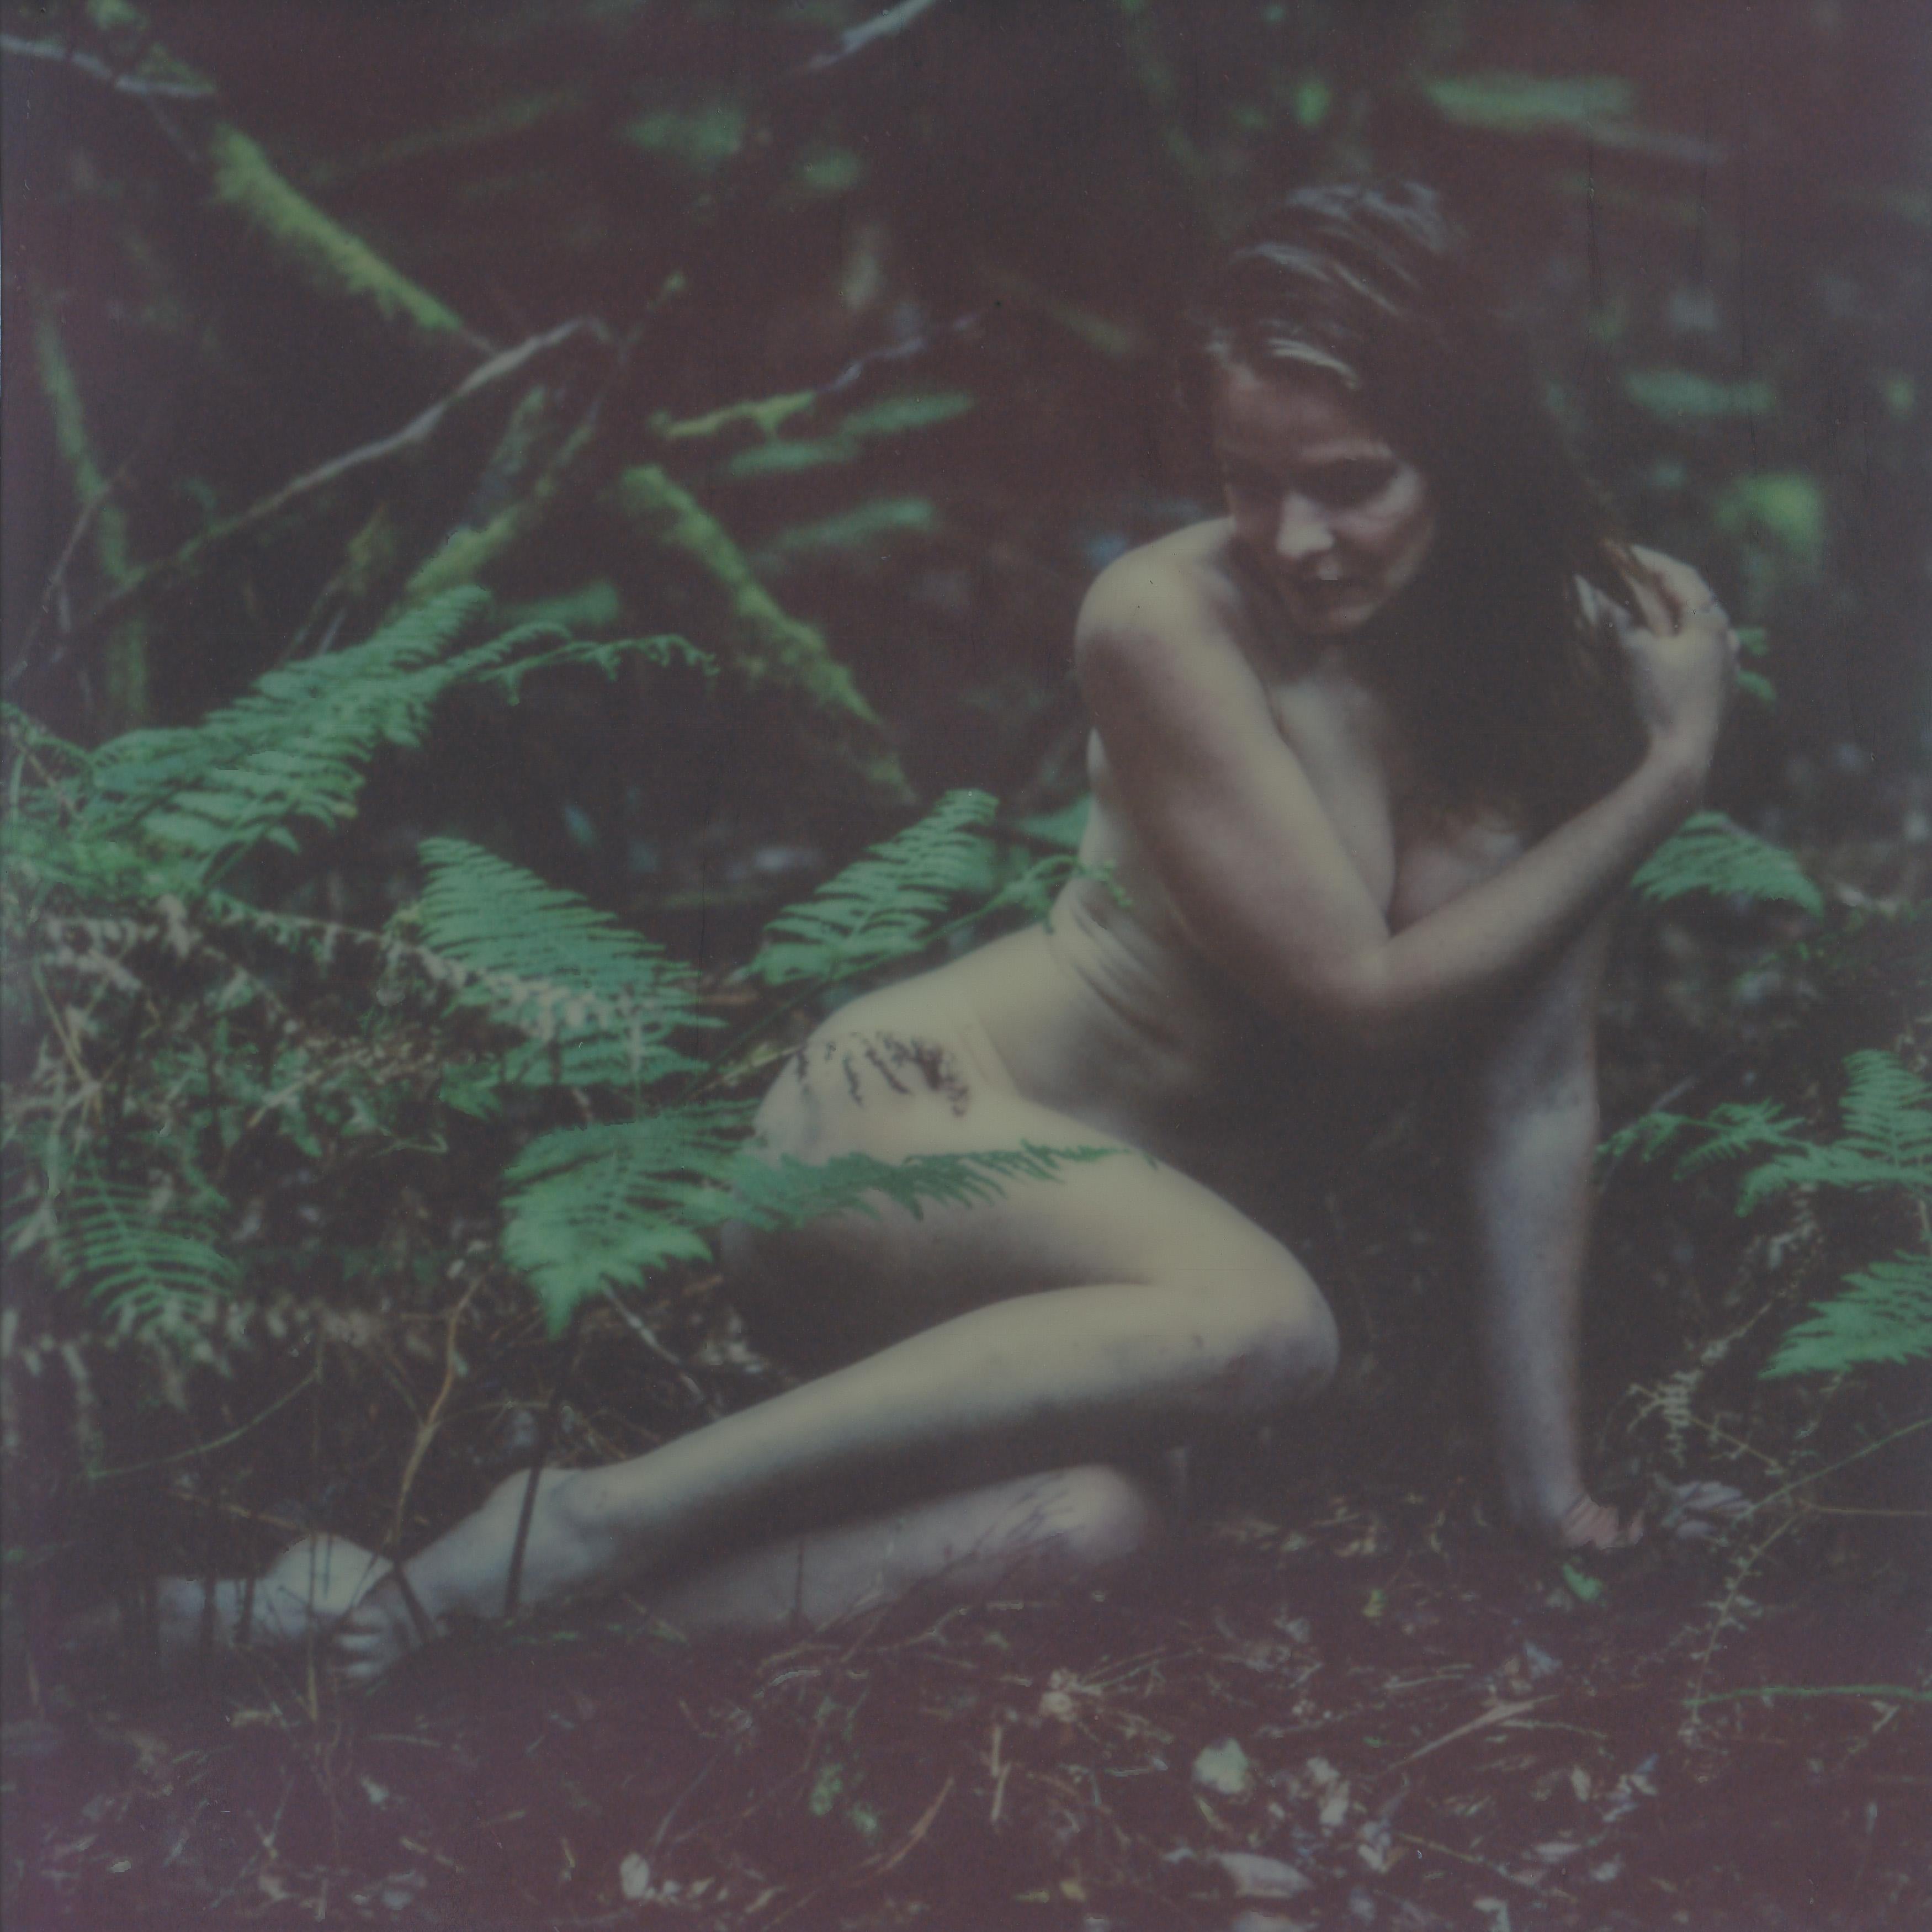 Kirsten Thys van den Audenaerde Nude Photograph - Heart of Glass - Contemporary, Nude, Women, Polaroid, 21st Century